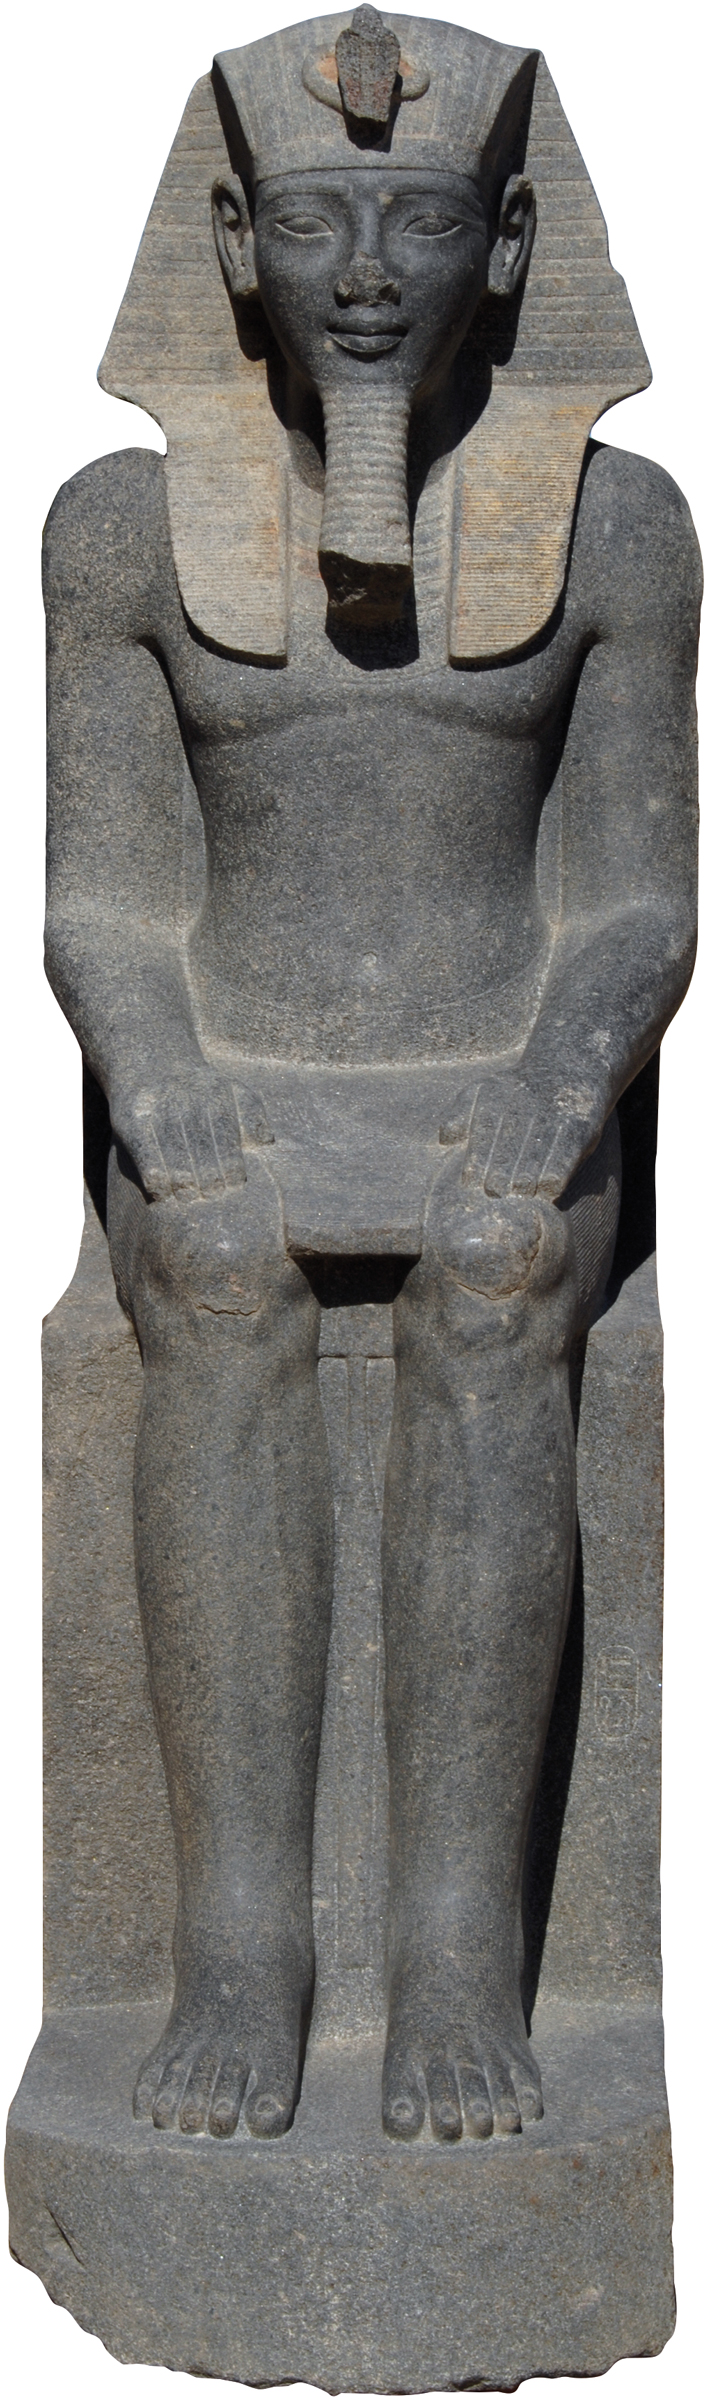 Egypt Amenhotep III Statue